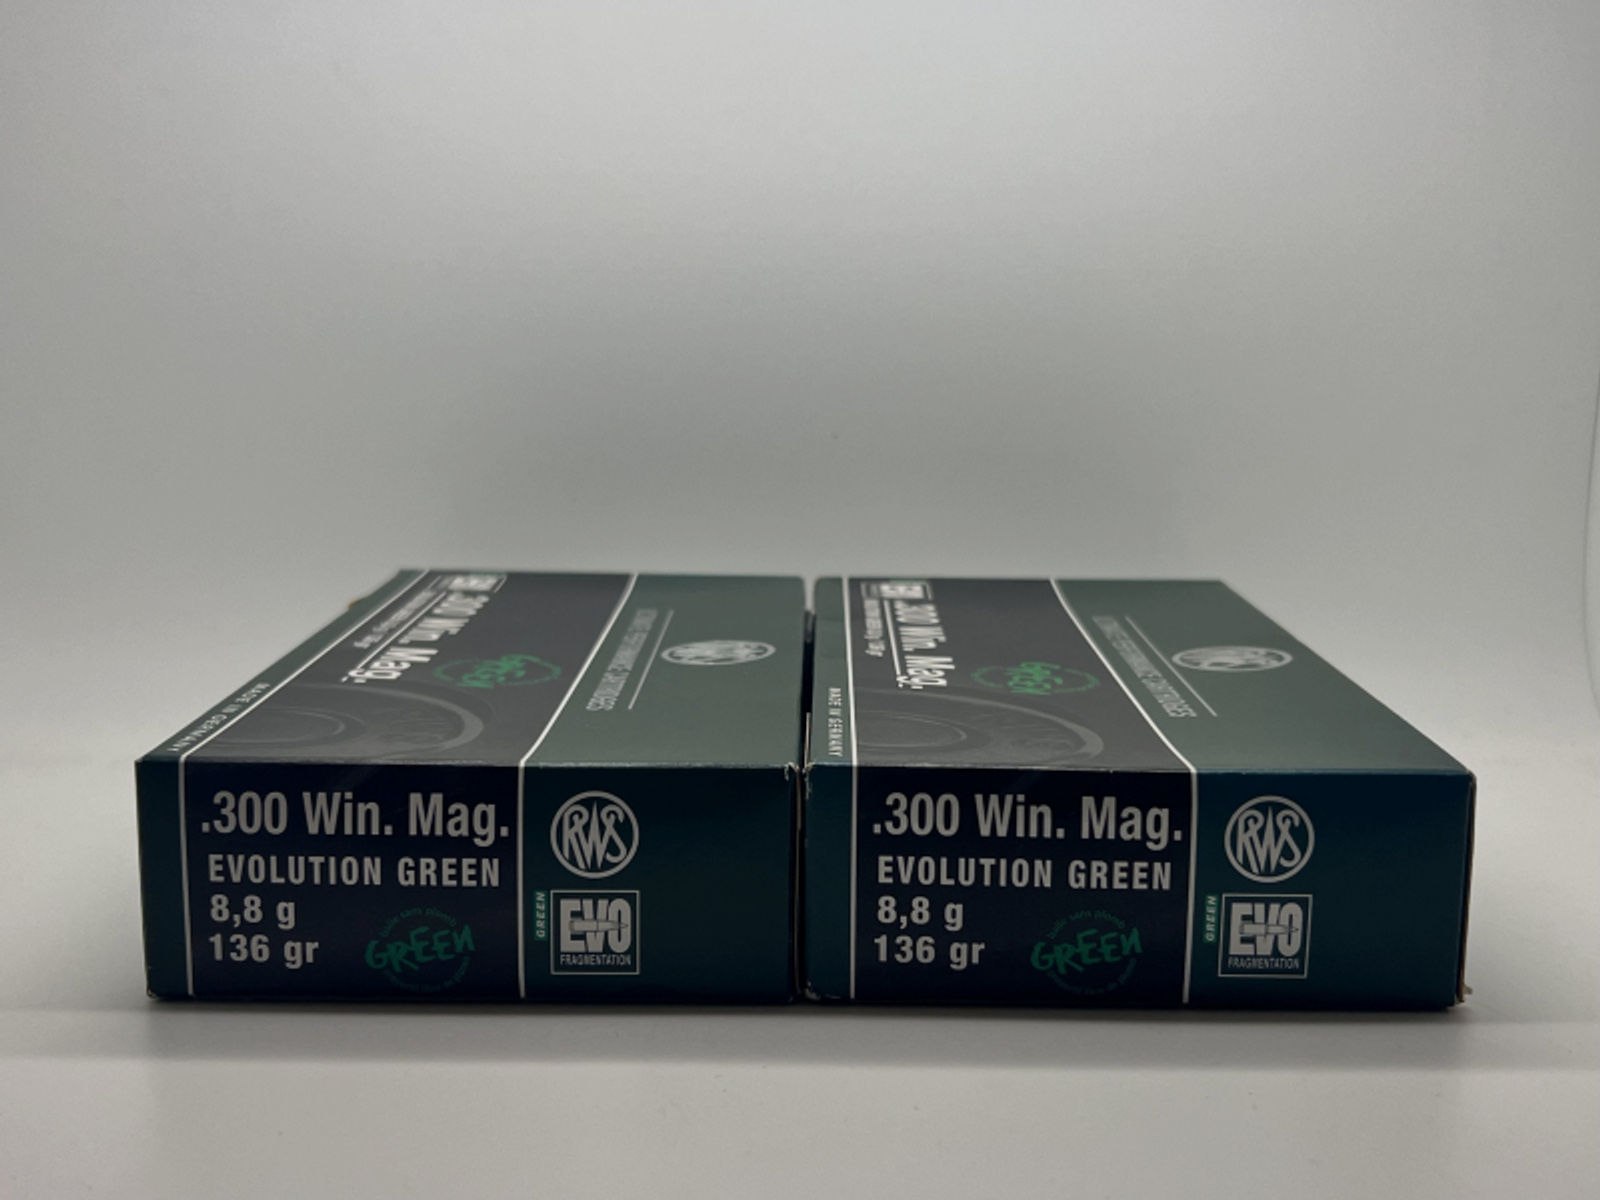 .300 Win Mag RWS Evolution Green 8.8g / 136gr. - 40 Schuss